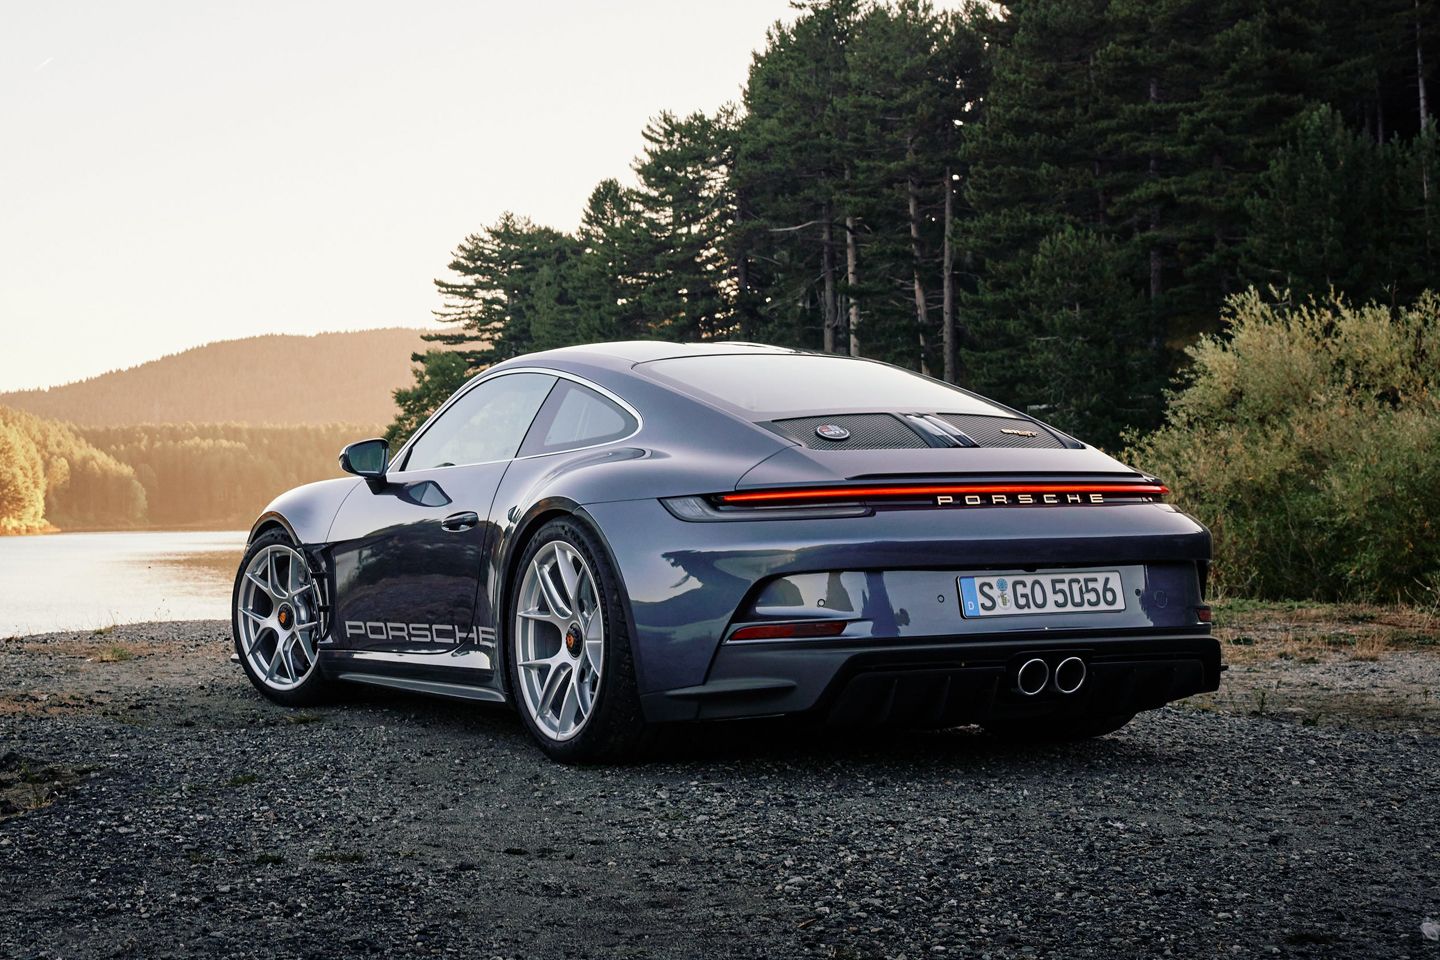 Porsche 911 S/T Review - Bloomberg